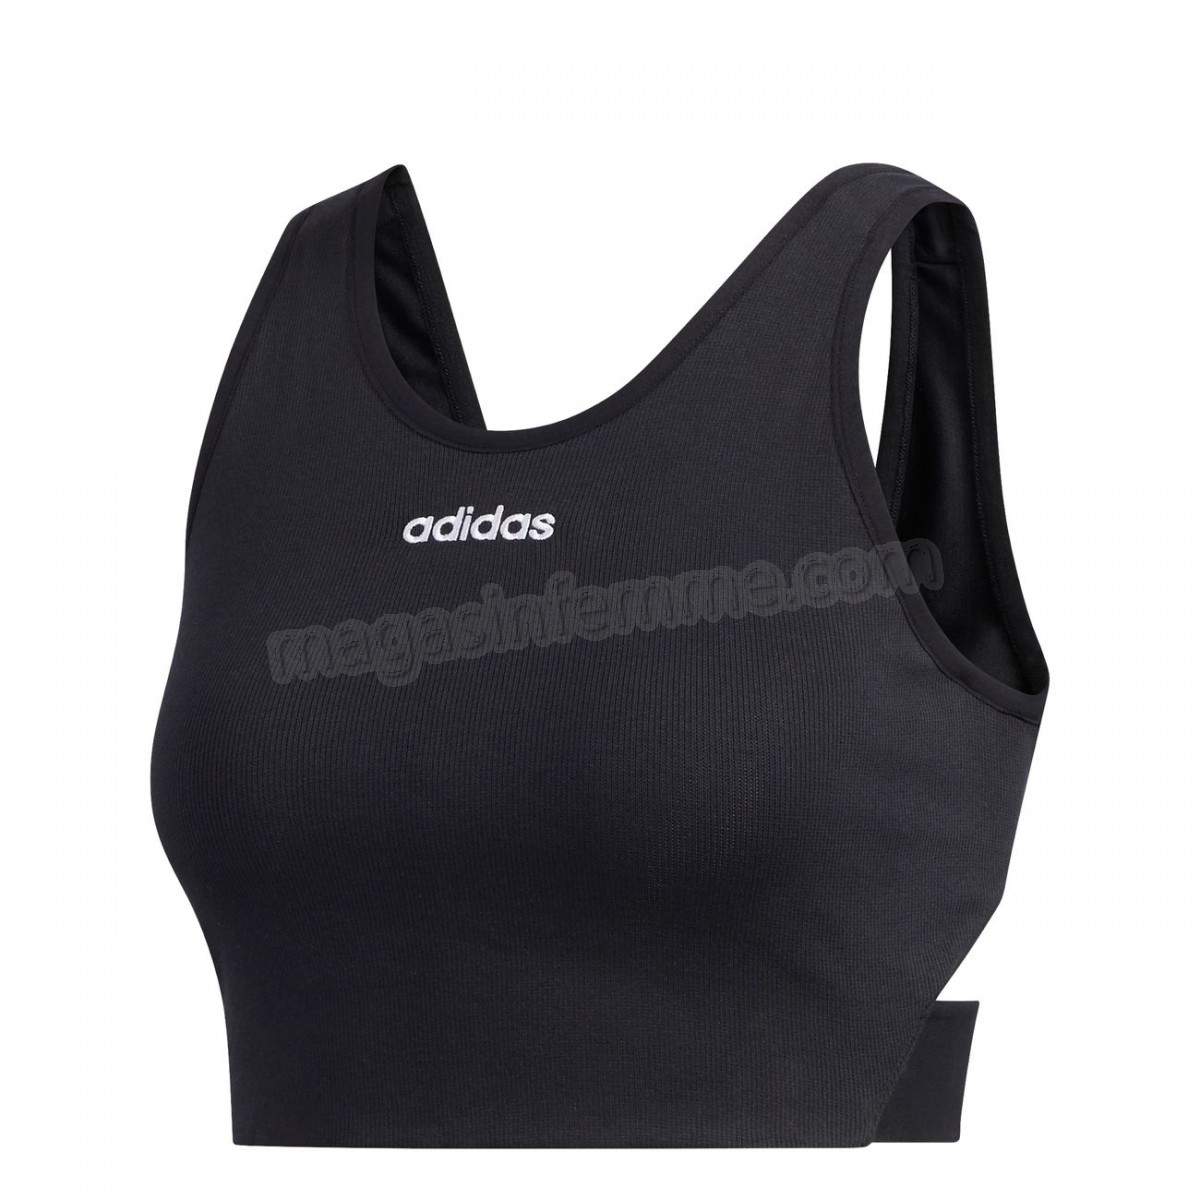 Adidas-Fitness femme ADIDAS Brassière adidas Core Training en solde - -0